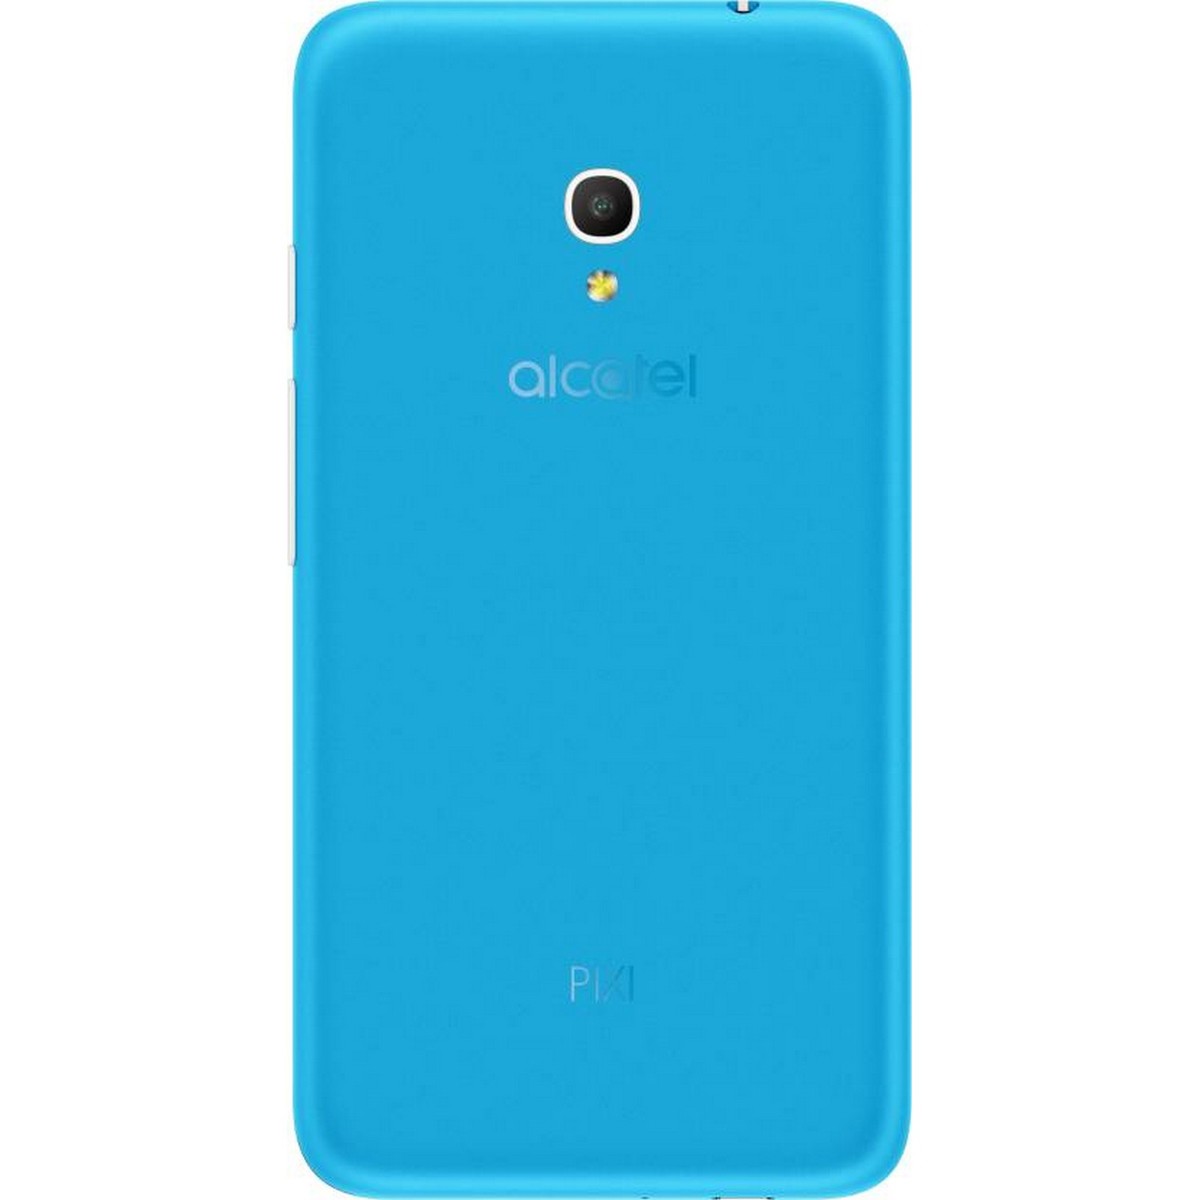 Alcatel Pixi 4 5044 8GB Blue